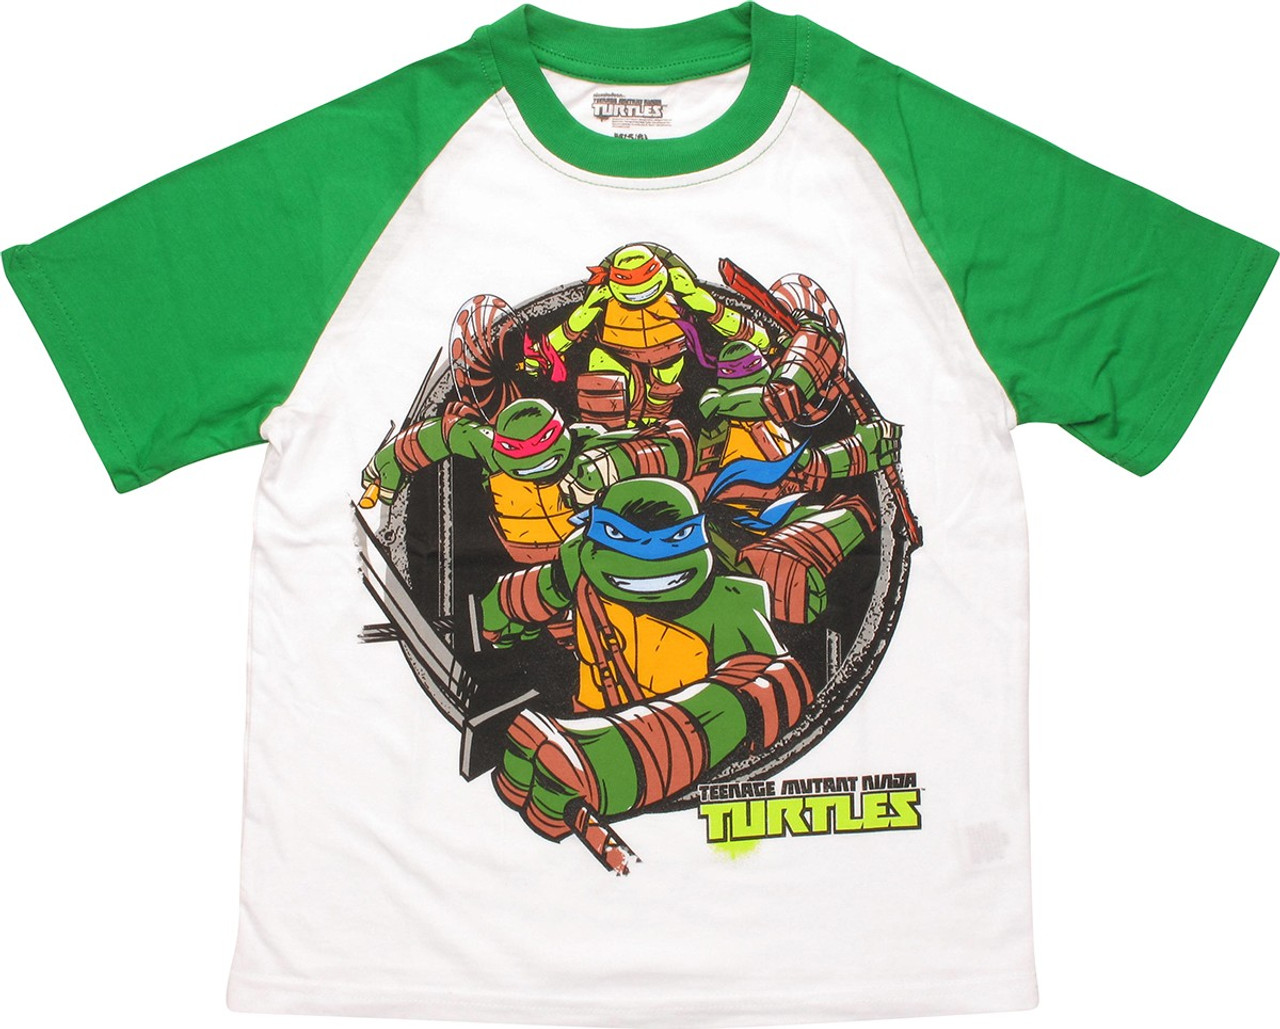 https://cdn11.bigcommerce.com/s-kjvm95bh8i/images/stencil/1280x1280/products/66805/104028/ninja-turtles-group-green-sleeved-juvenile-t-shirt-5__28655.1512276864.jpg?c=2